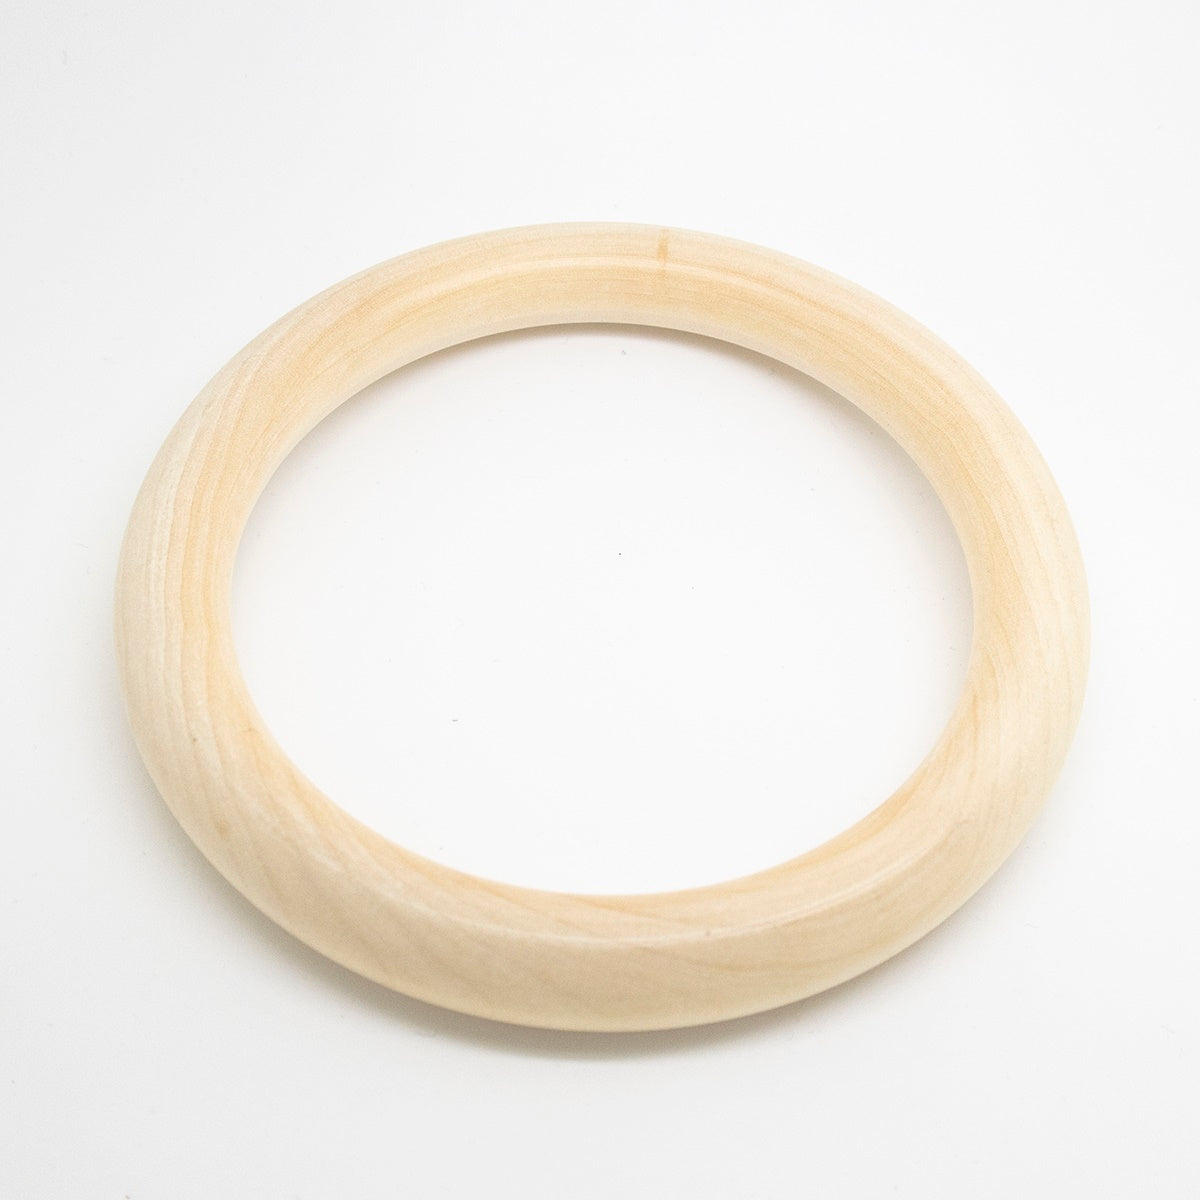 Wooden Rings for Macramé